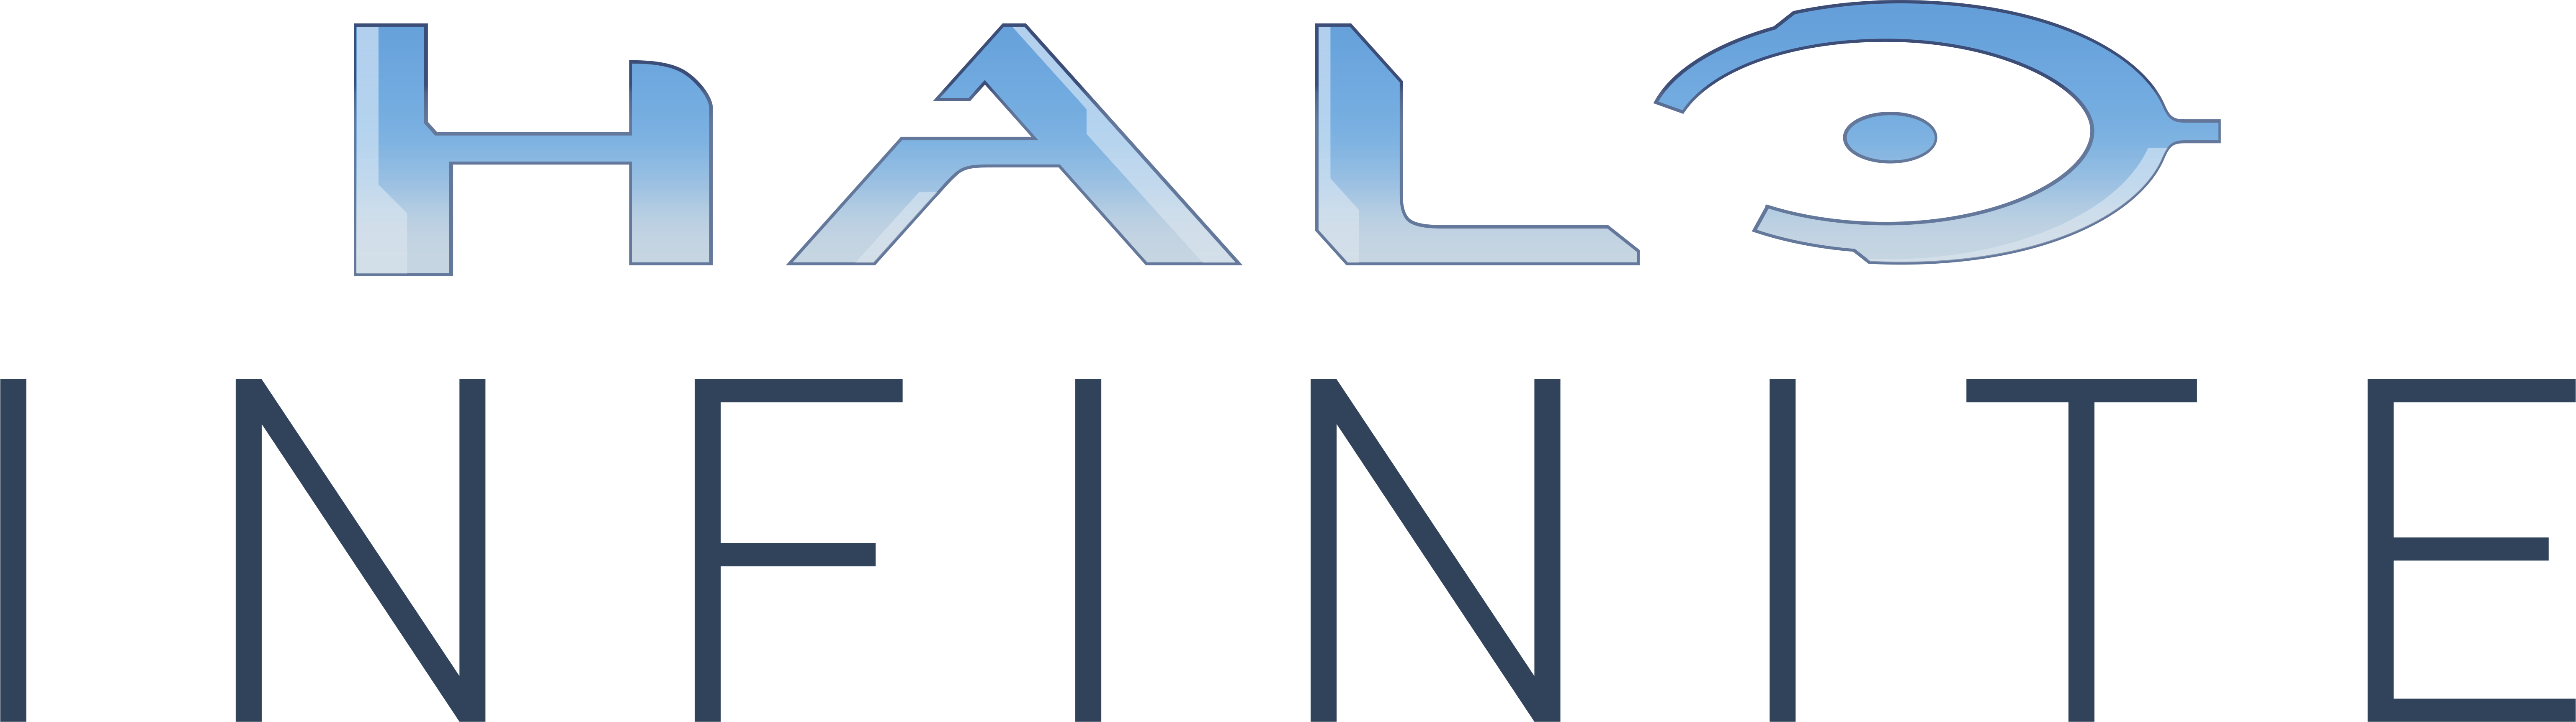 Halo Infinite: Memory Agent - Halopedia, the Halo wiki